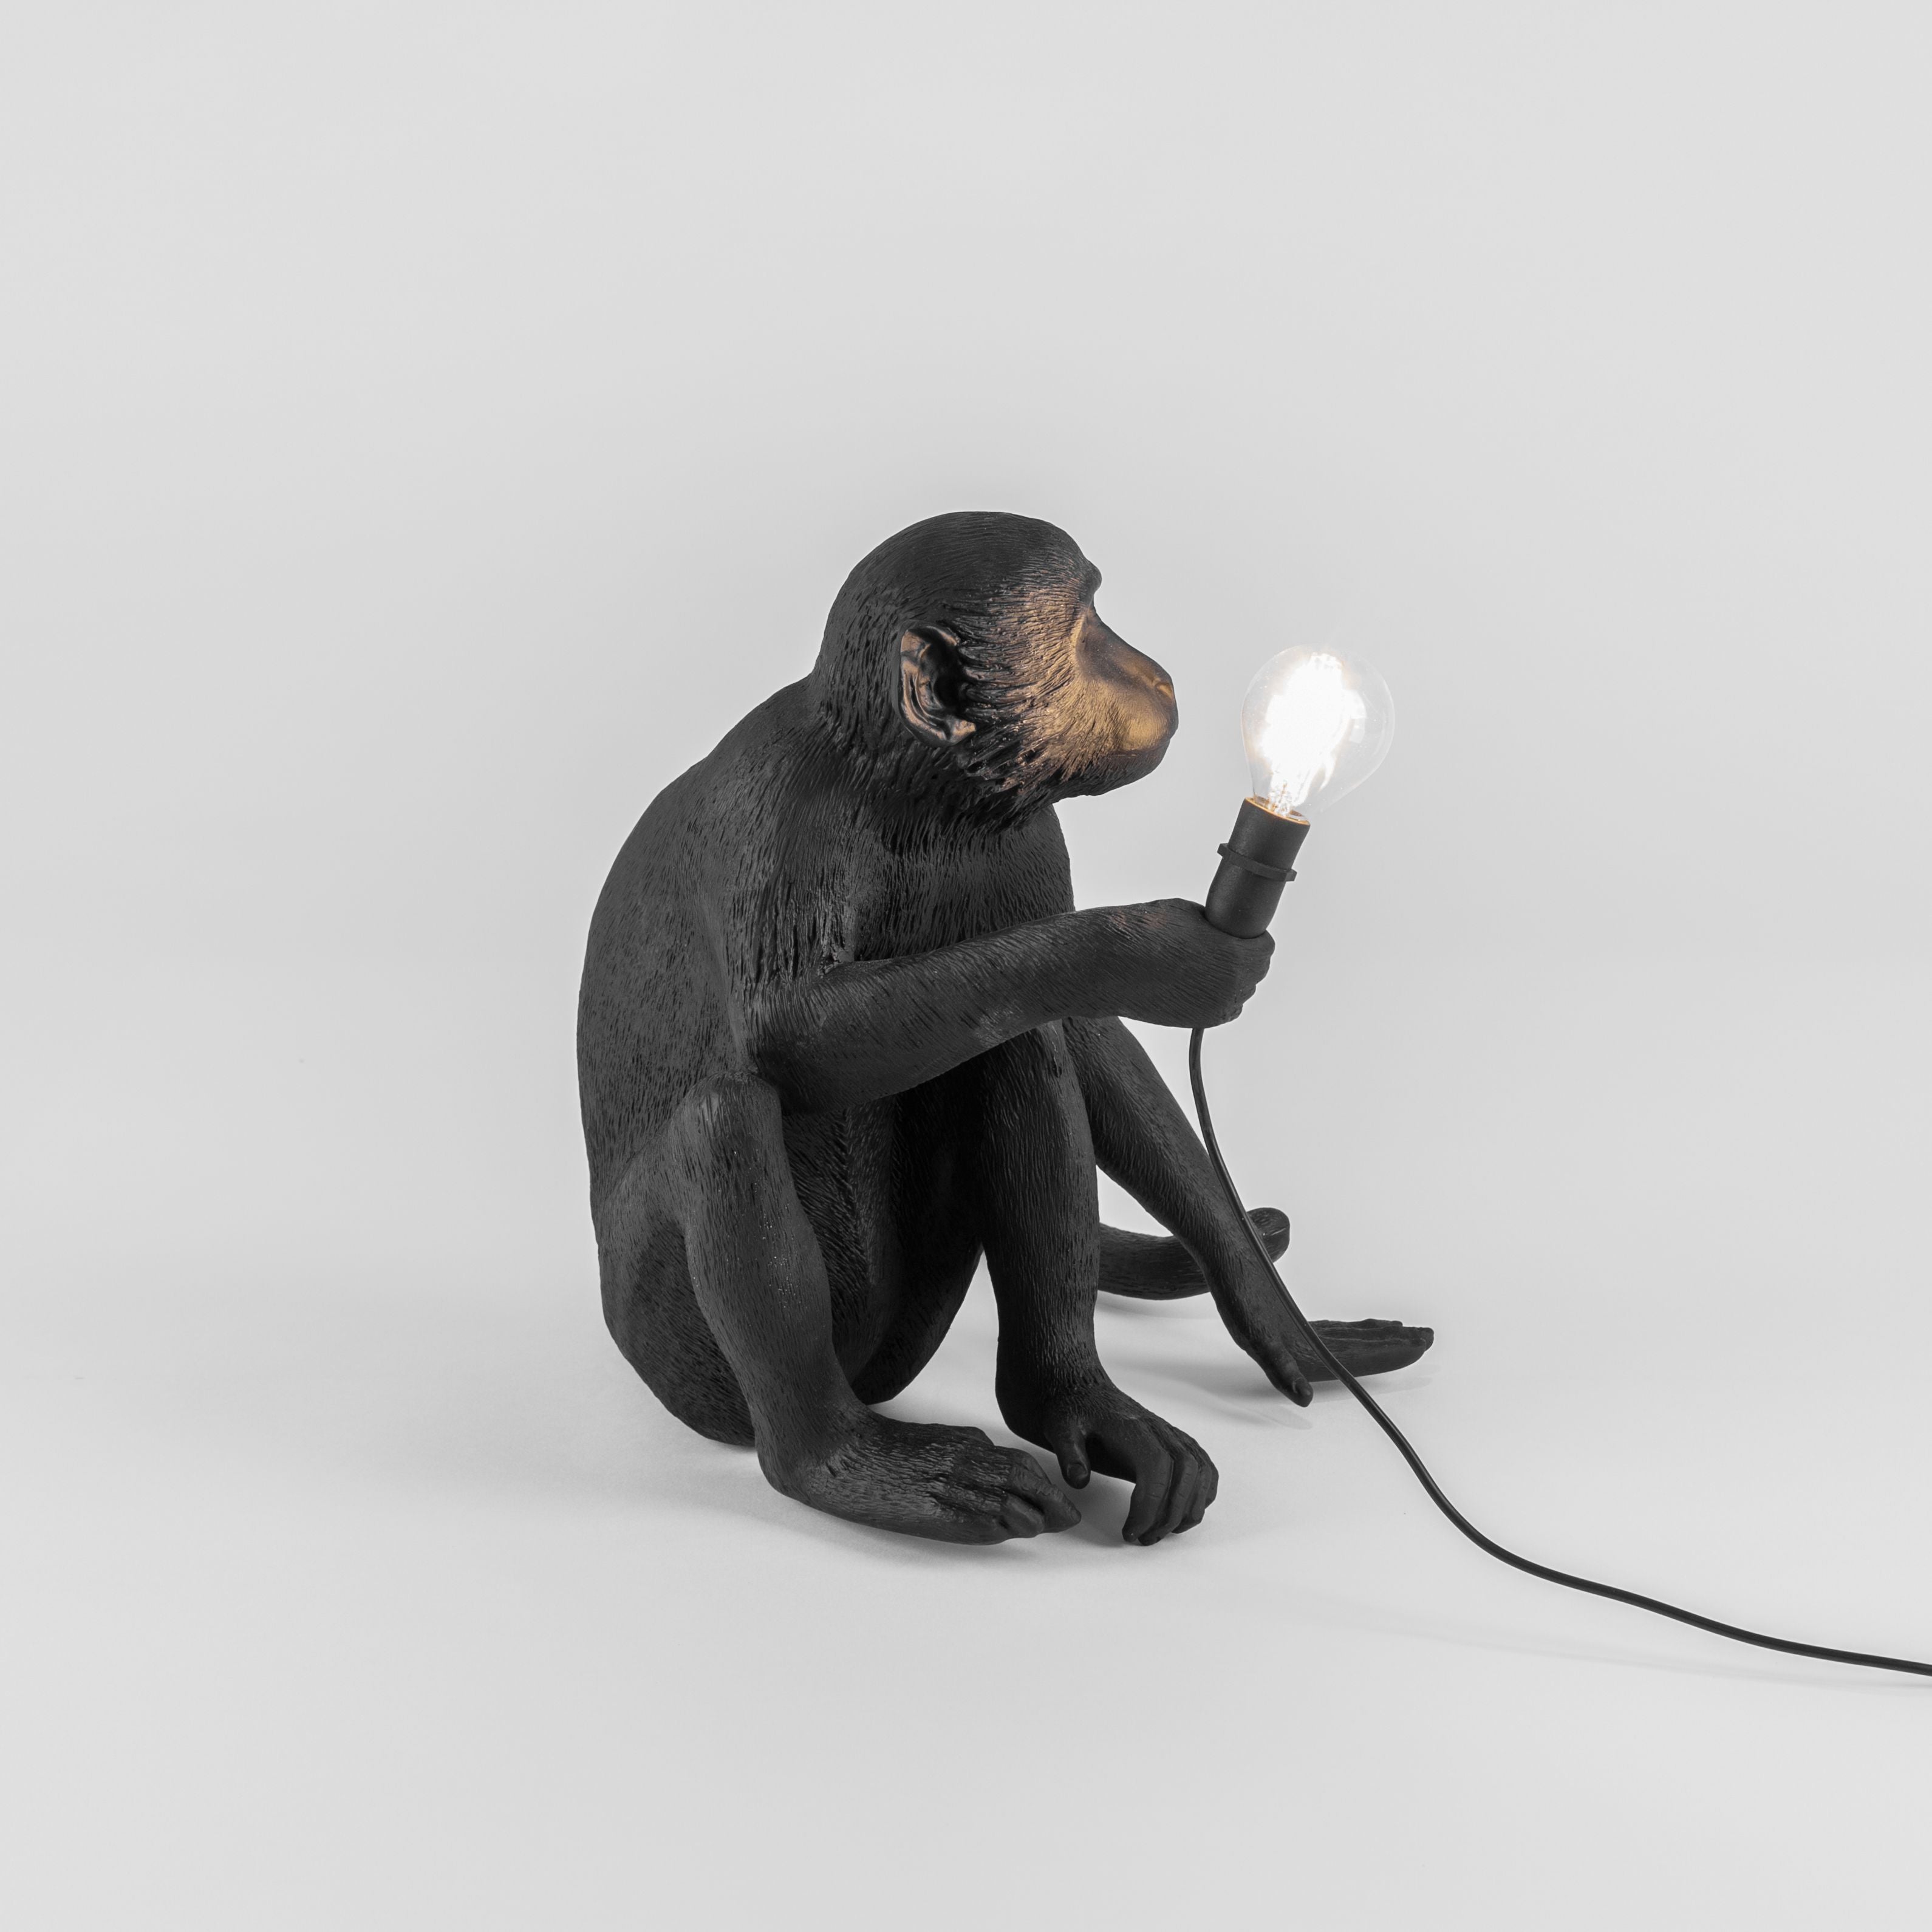 Seletti Monkey Outdoor Lamp Black, der sidder